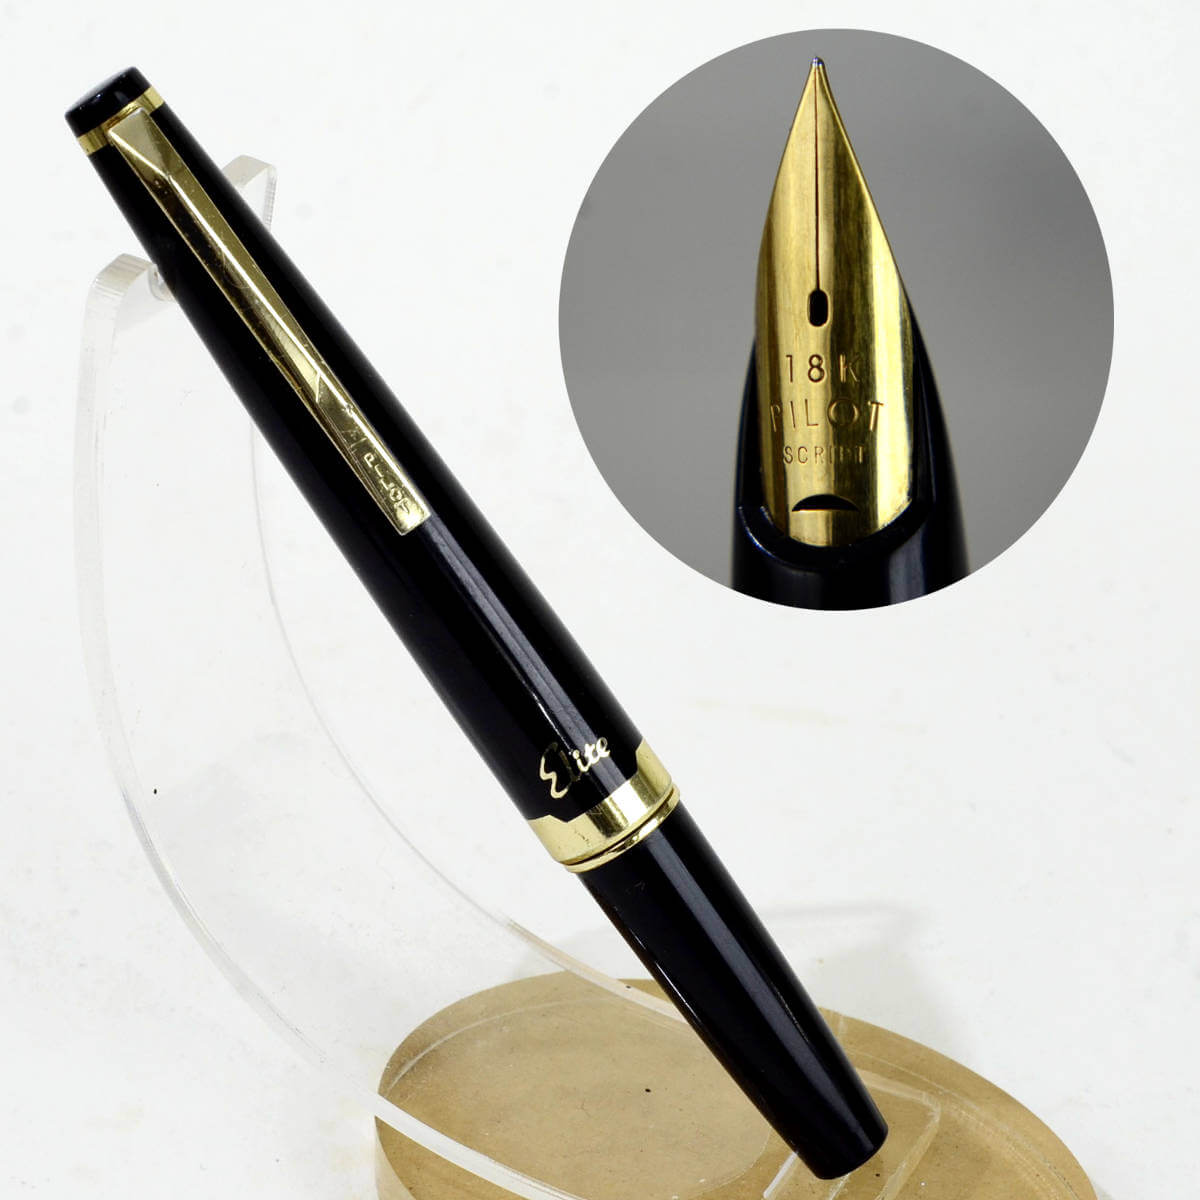 Buy Pilot 18K Elite 95s pocket fountain pen with 18K gold script nib online